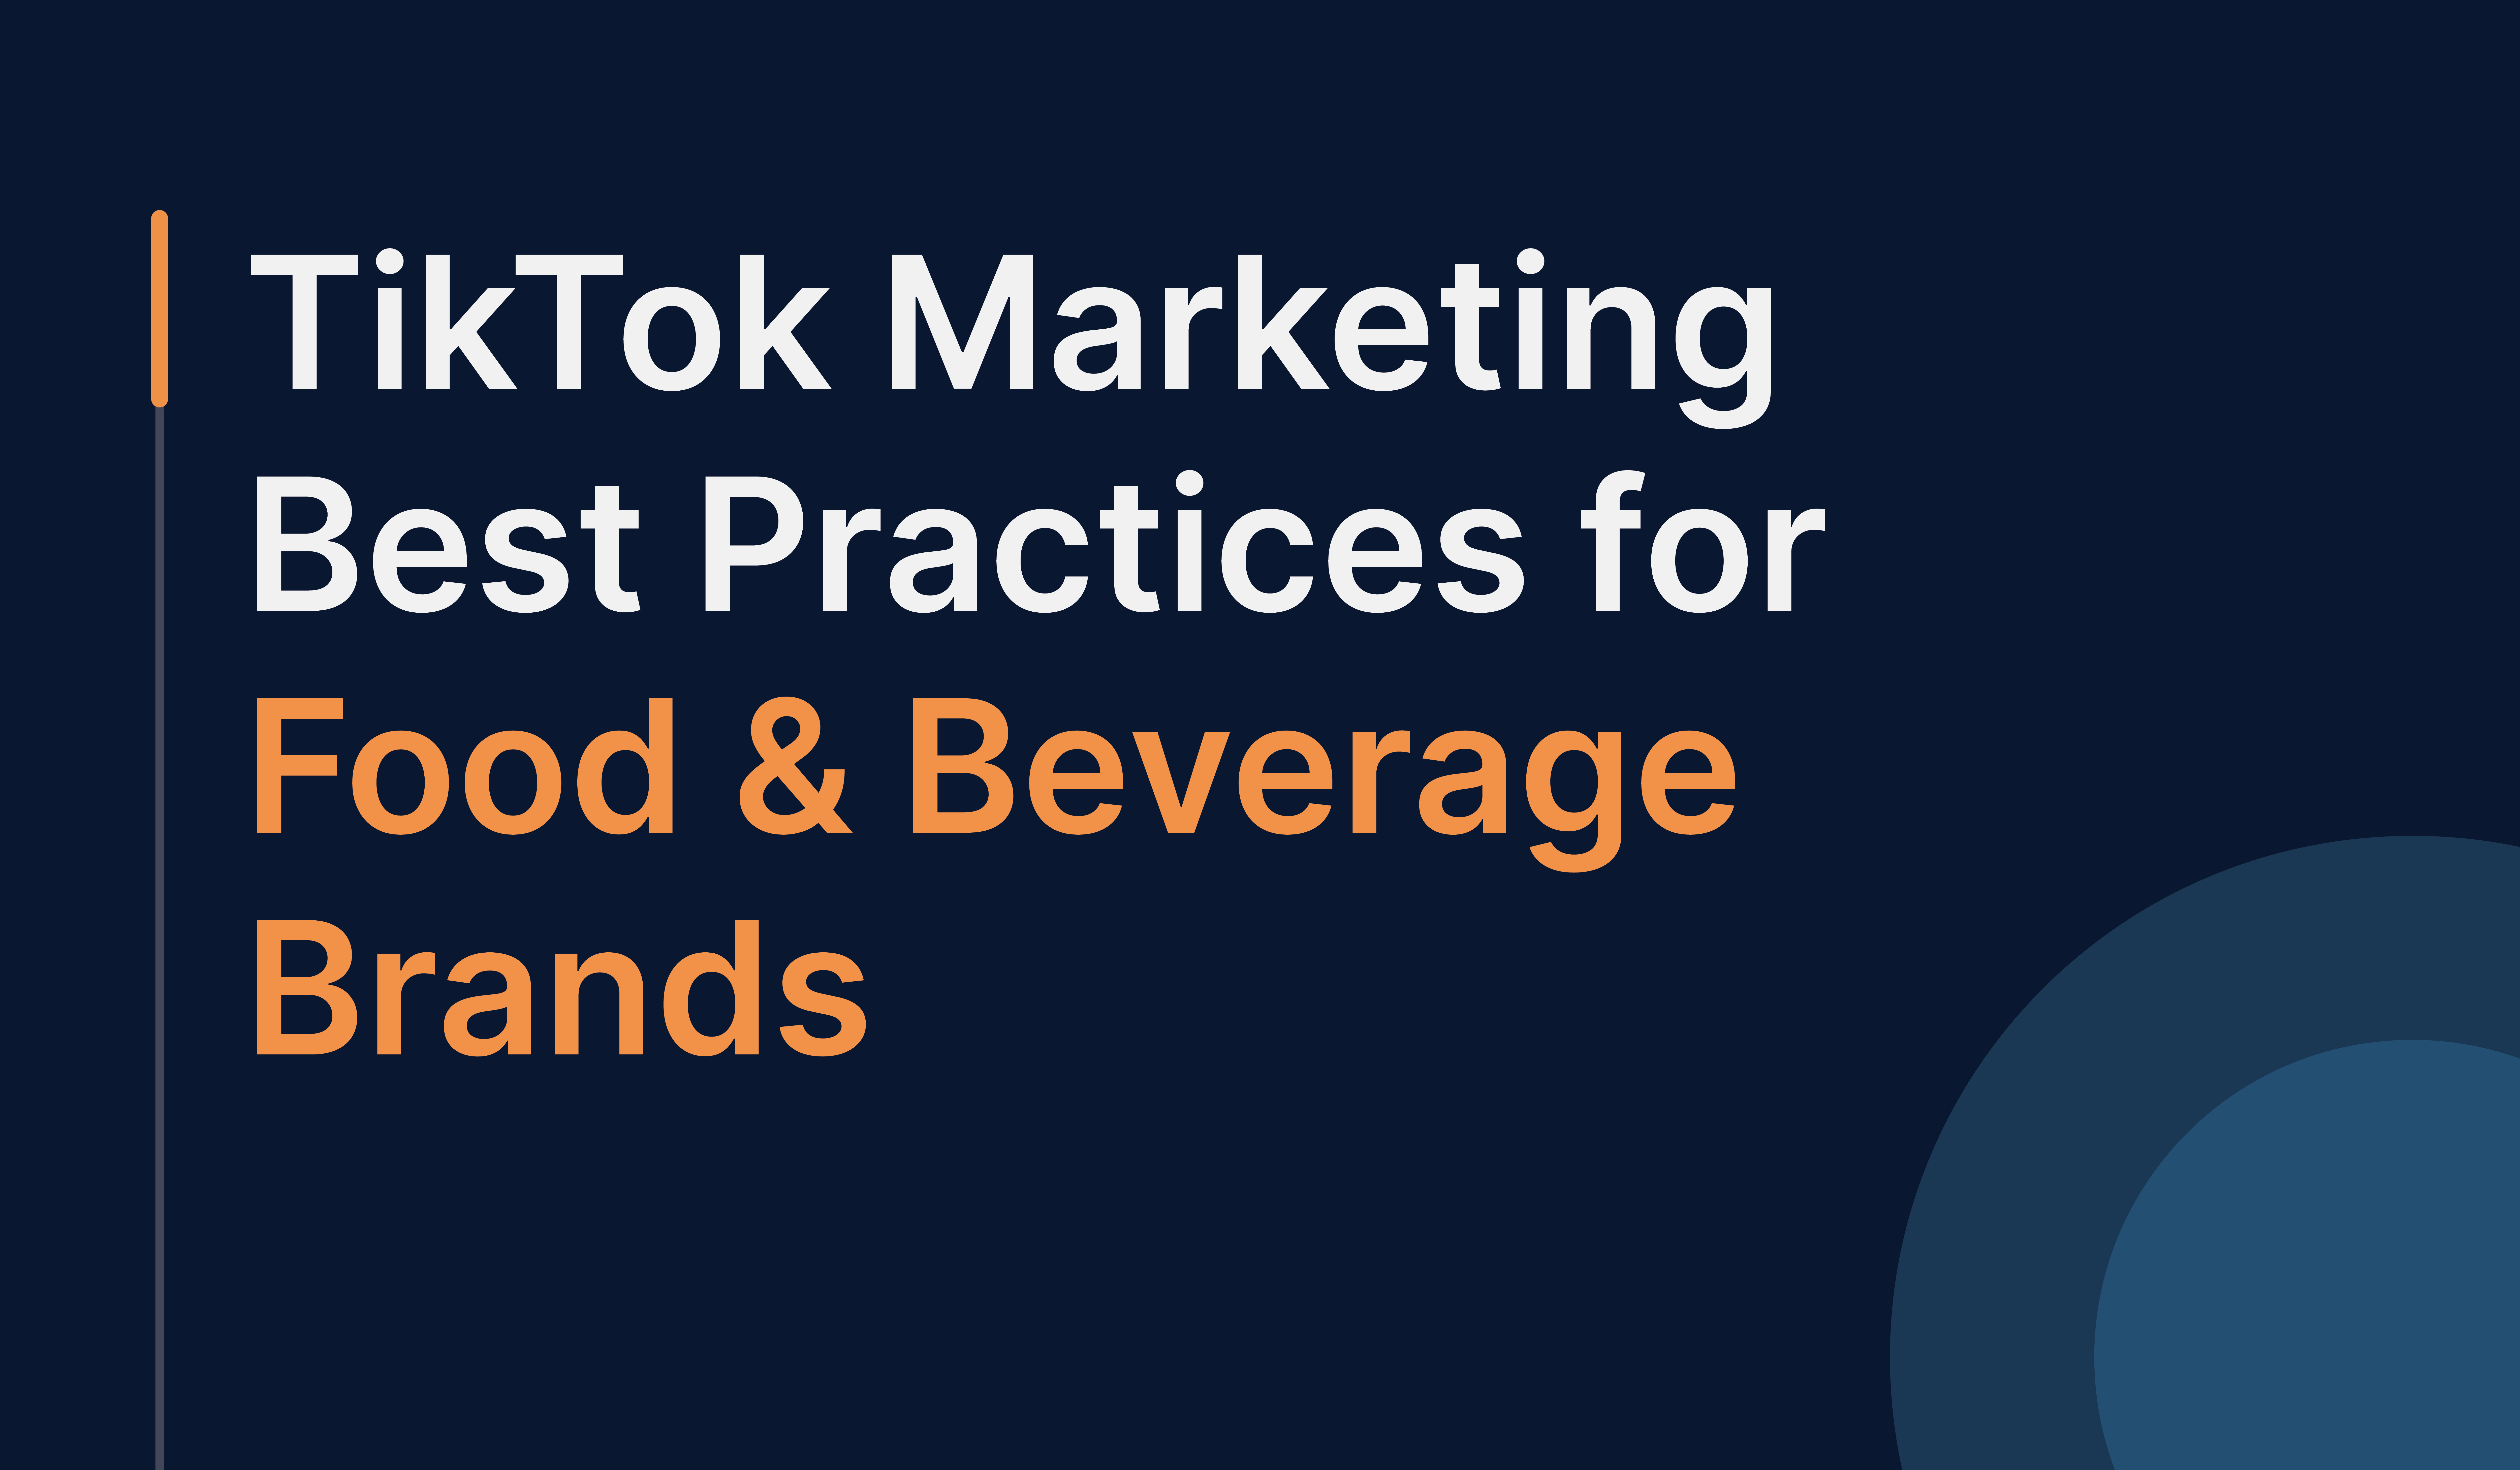 TikTok Marketing Best Practices for Food & Beverage Brands 